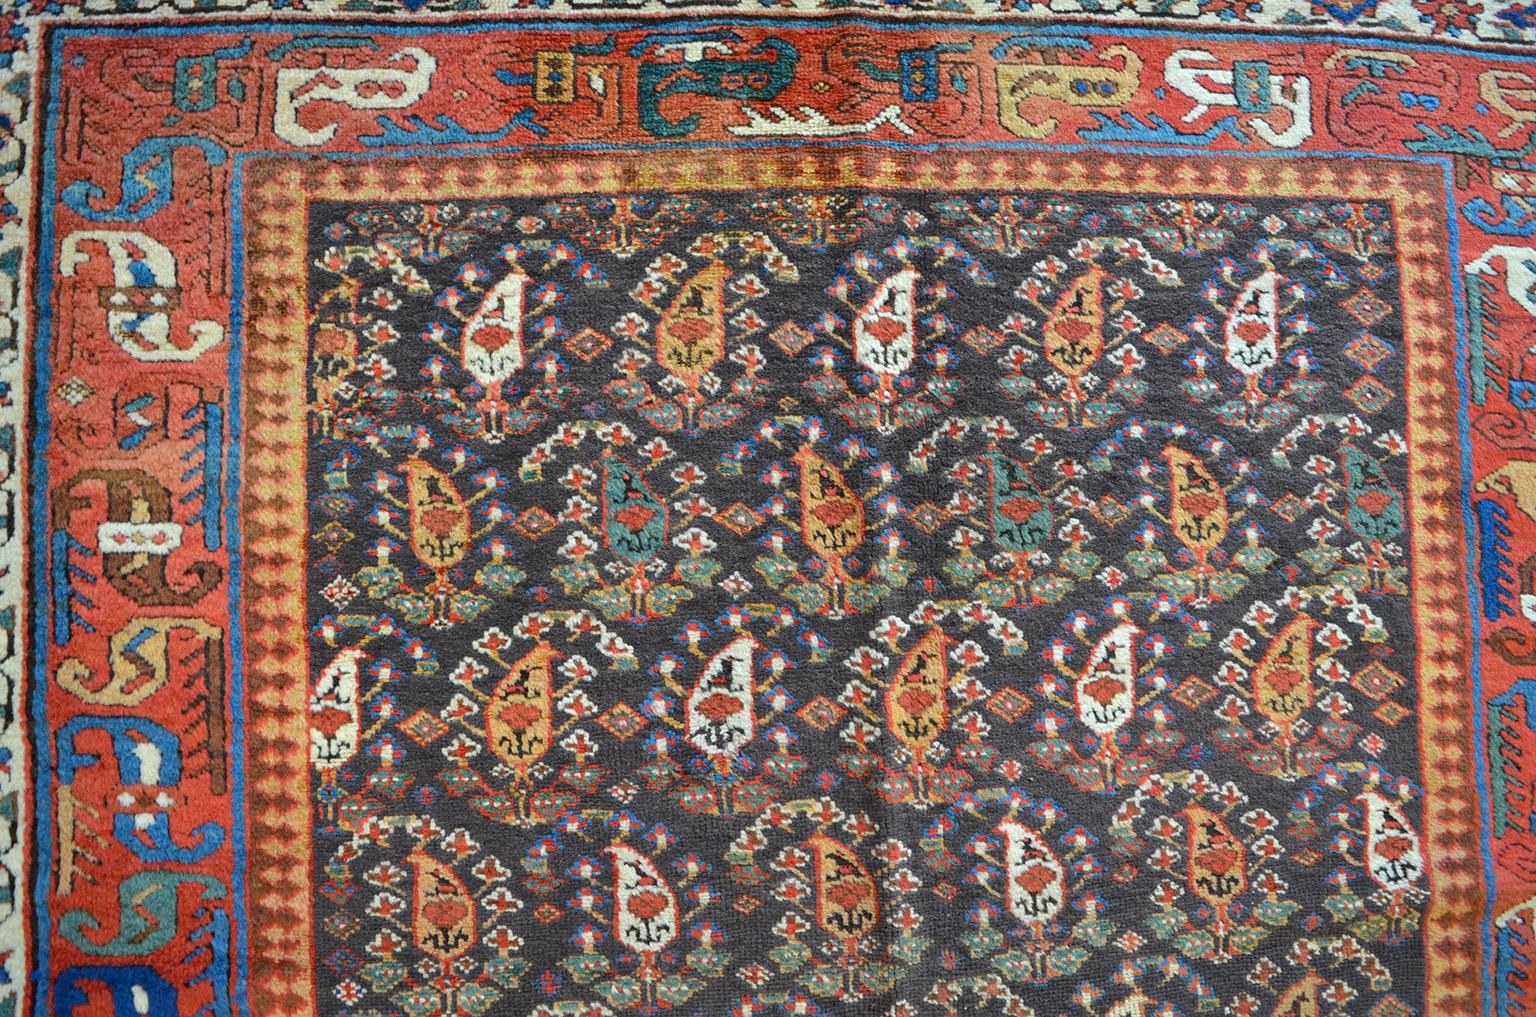 This antique Karabagh Persian carpet circa 1870 in pure handspun wool showcases an allover paisley, or 